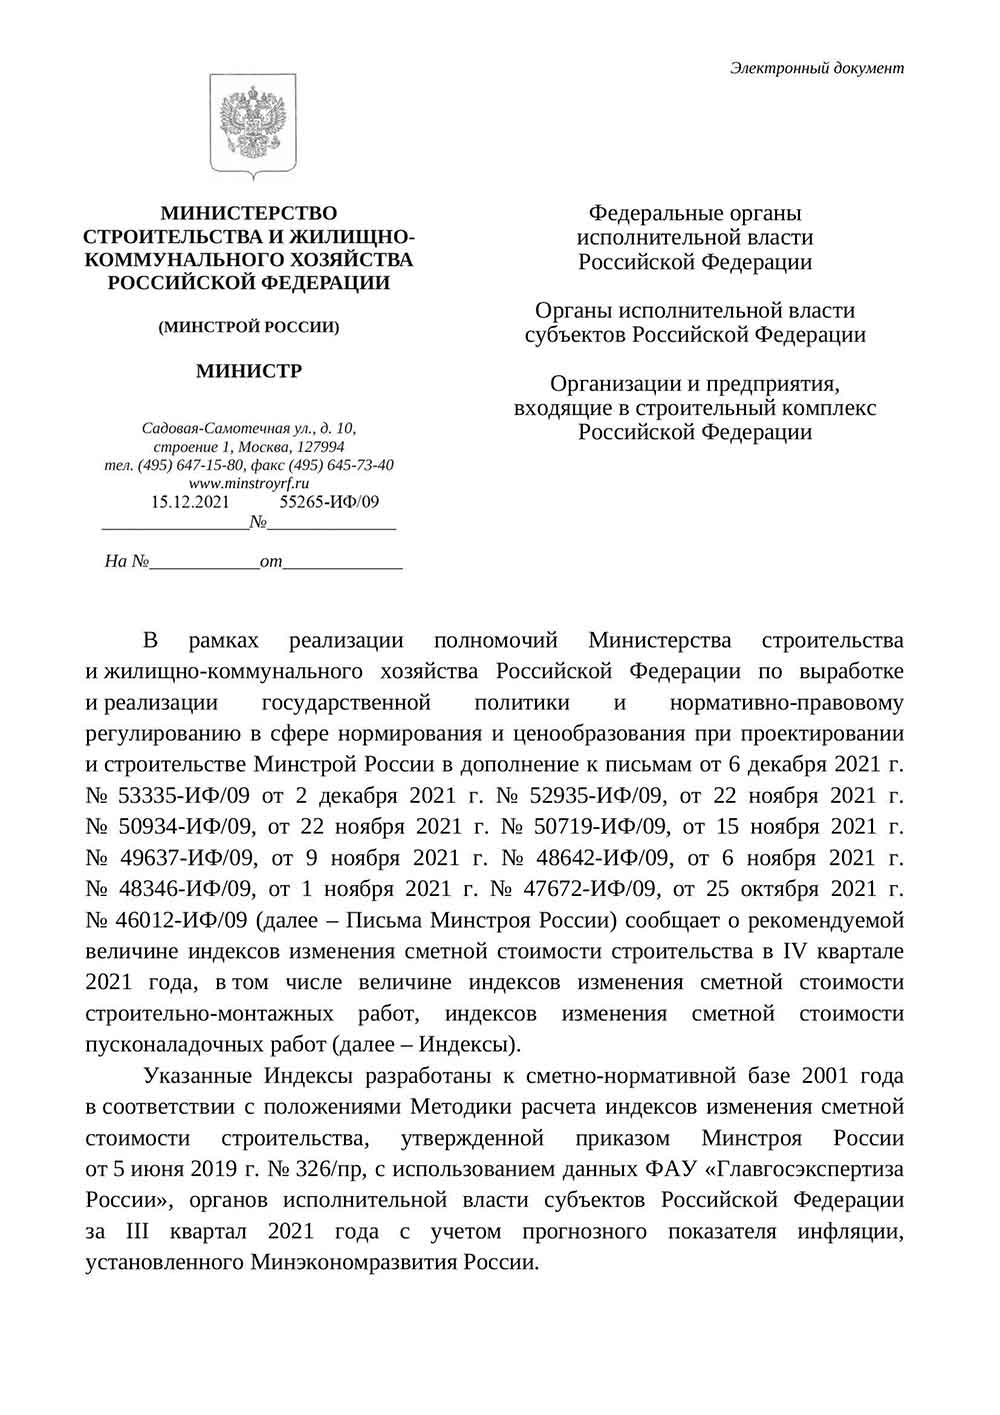 Письмо Минстроя РФ №55265-ИФ/09 от 15.12.2021 г.